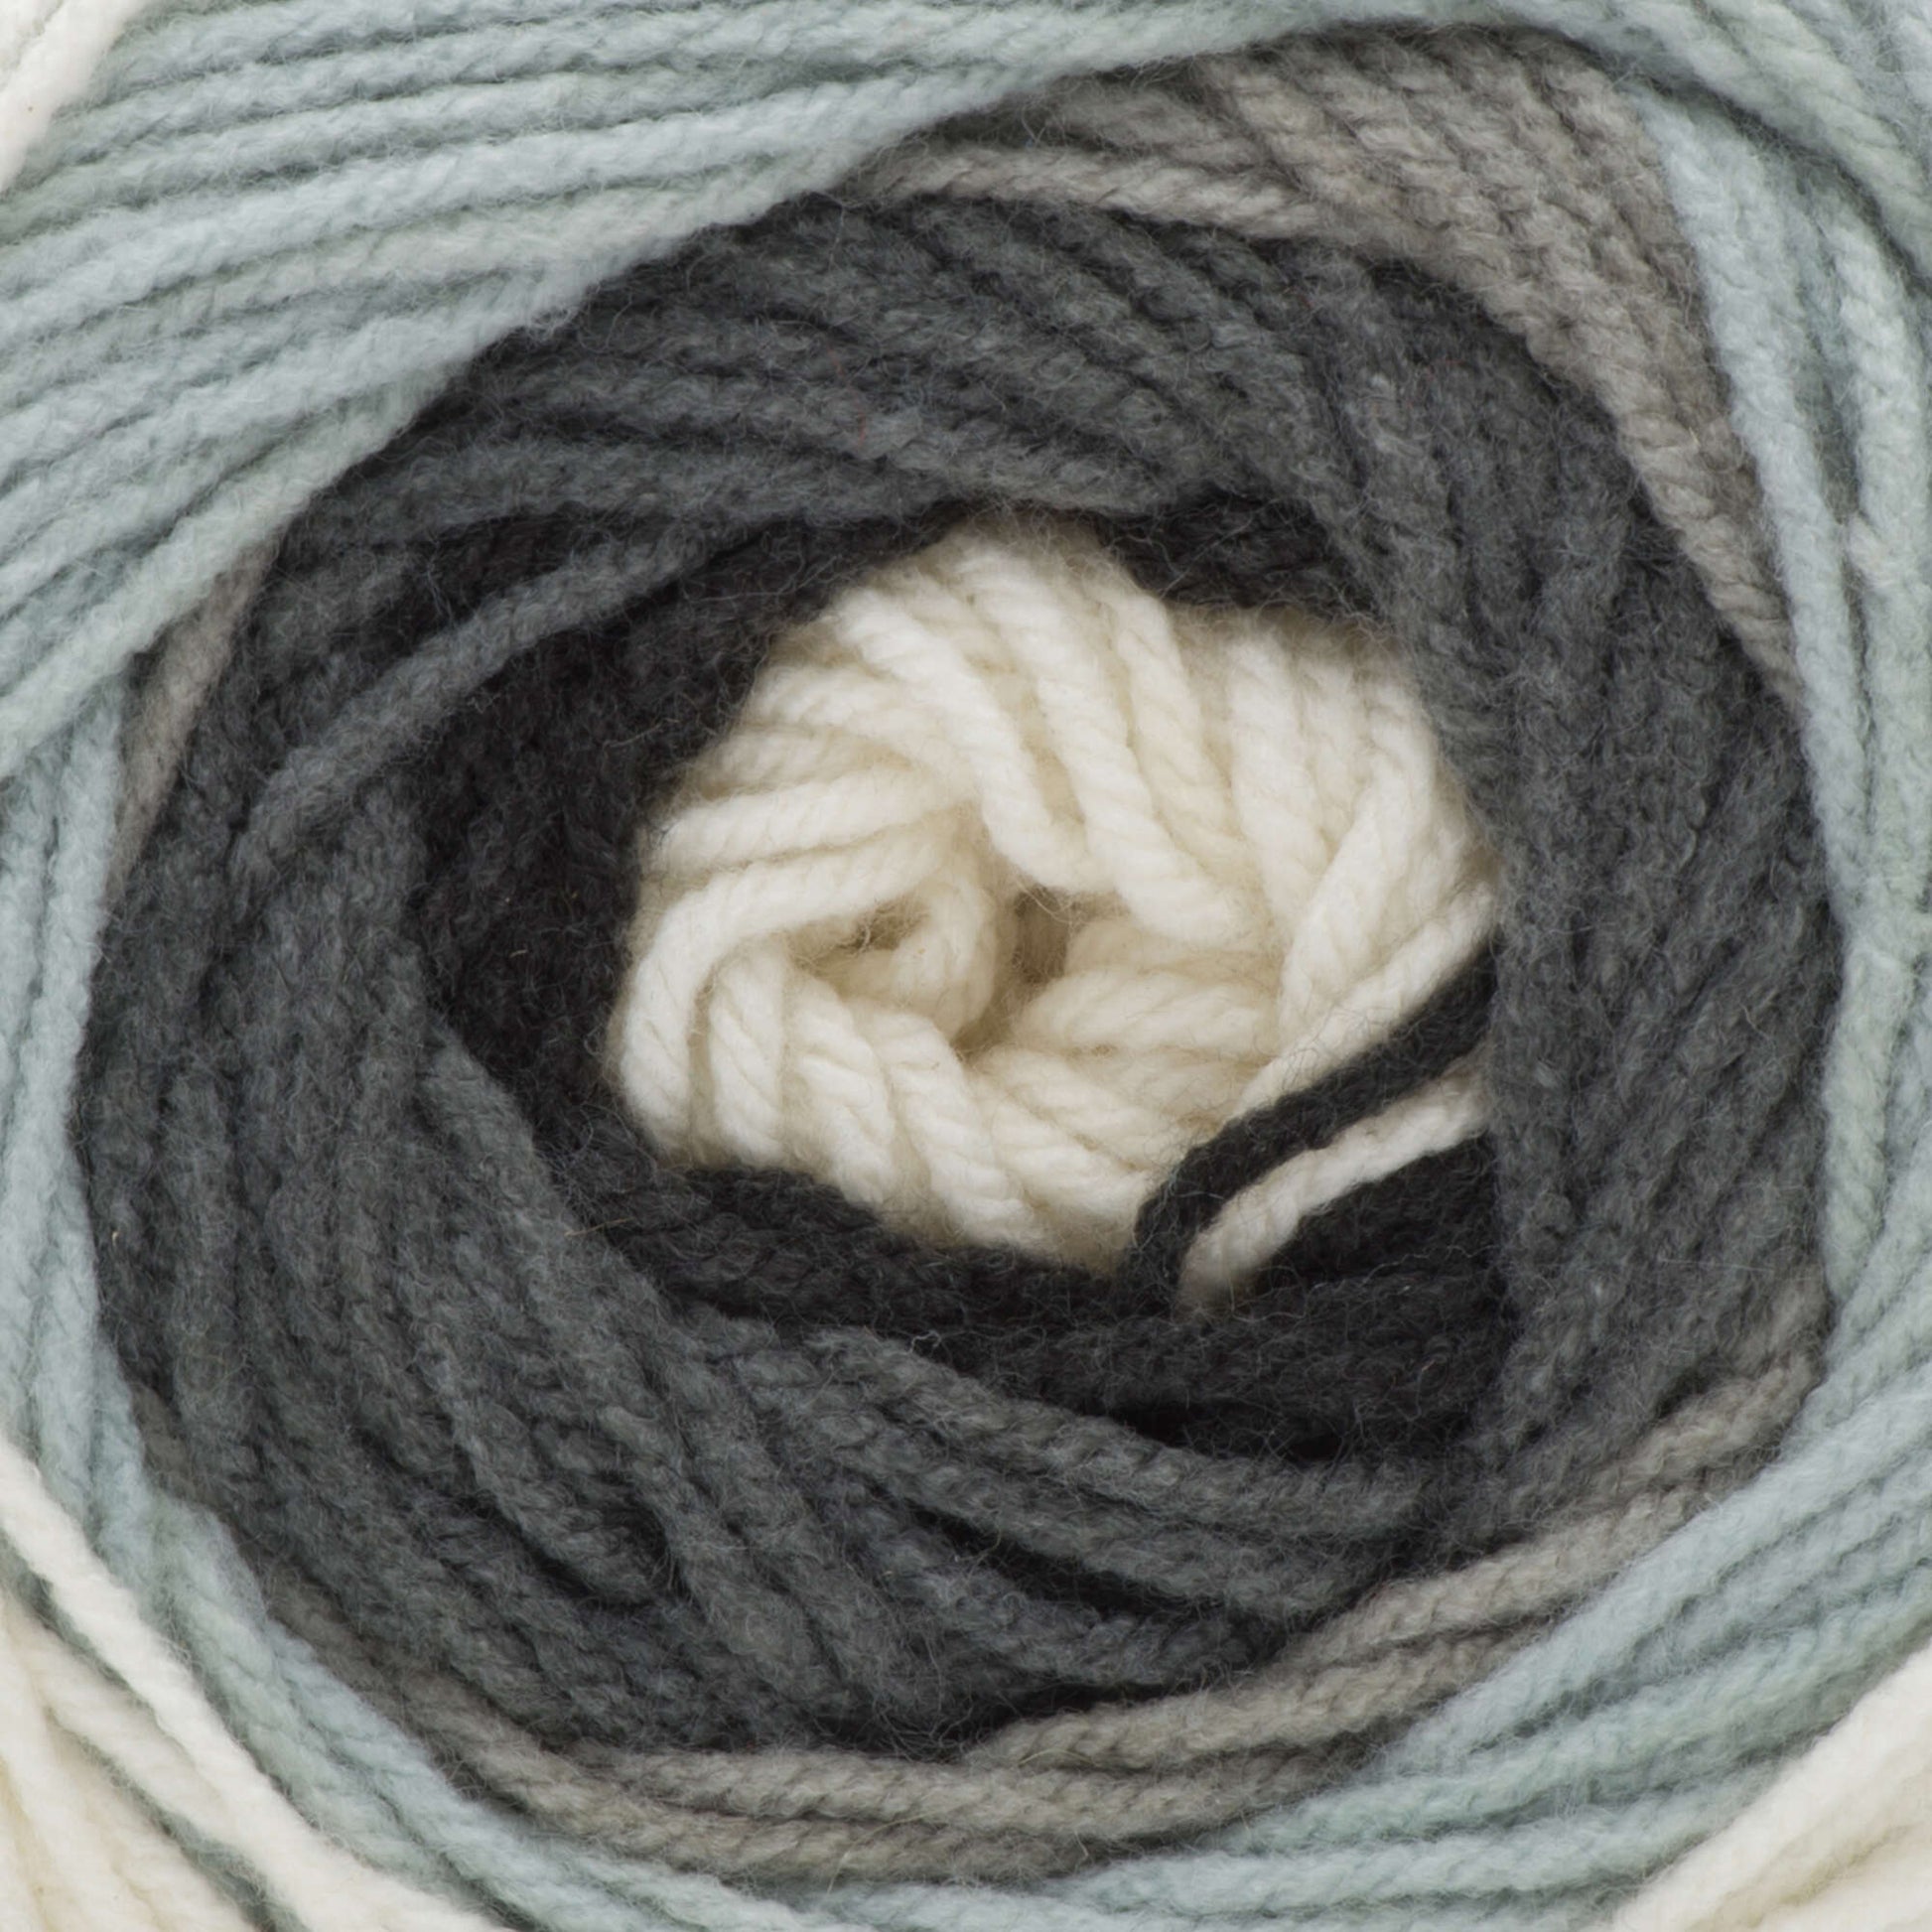  Bernat Knitting Yarn Super Value Stripes Wildberry 3